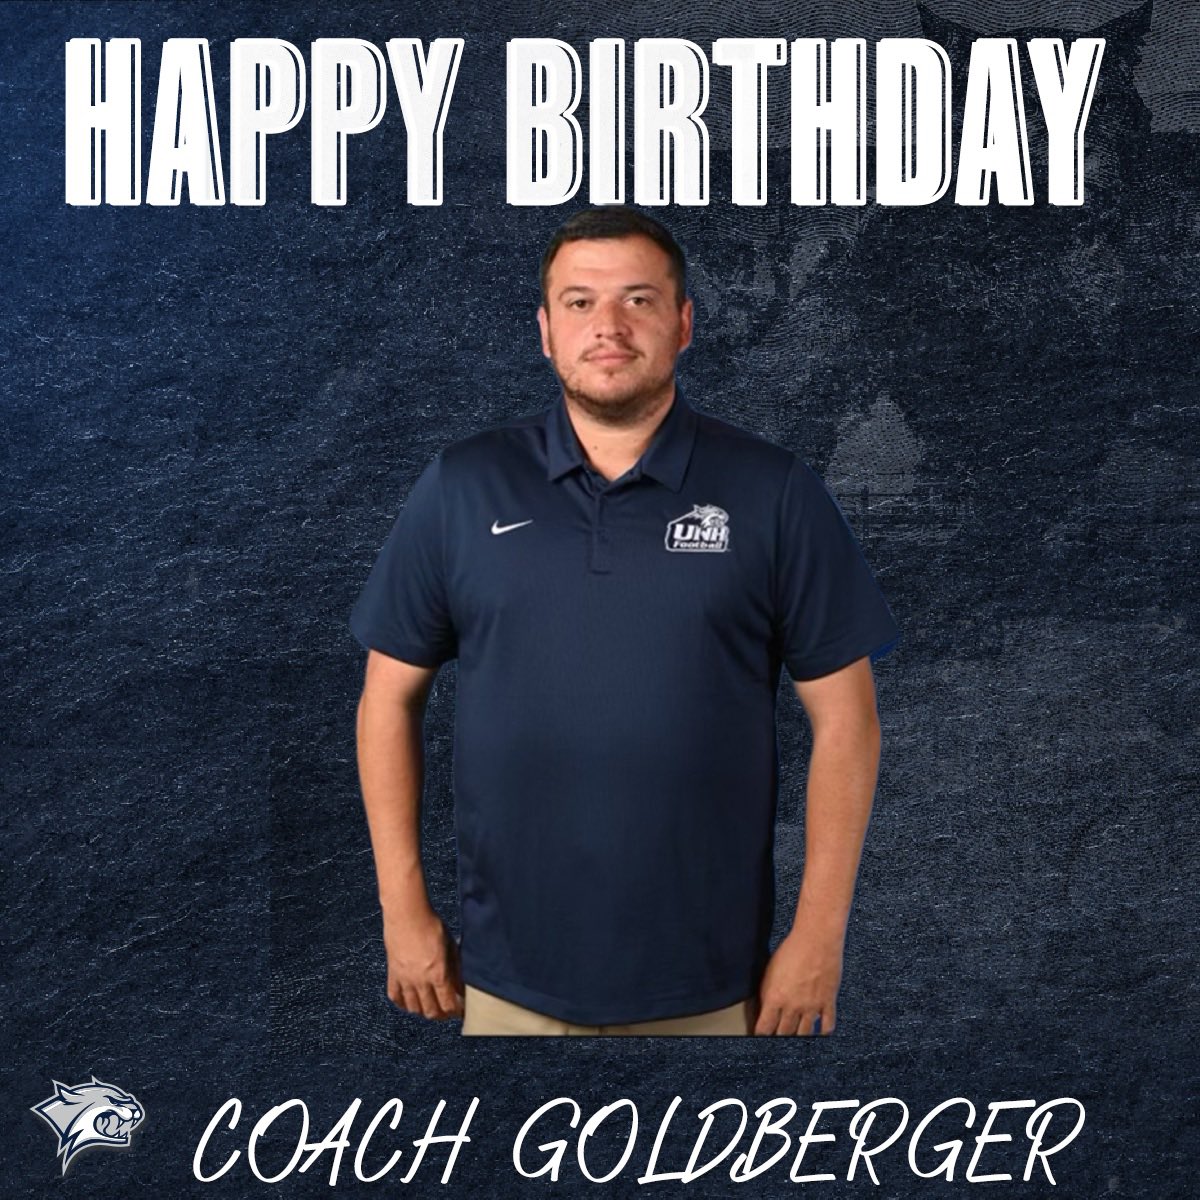 Happy birthday @CoachGoldberger